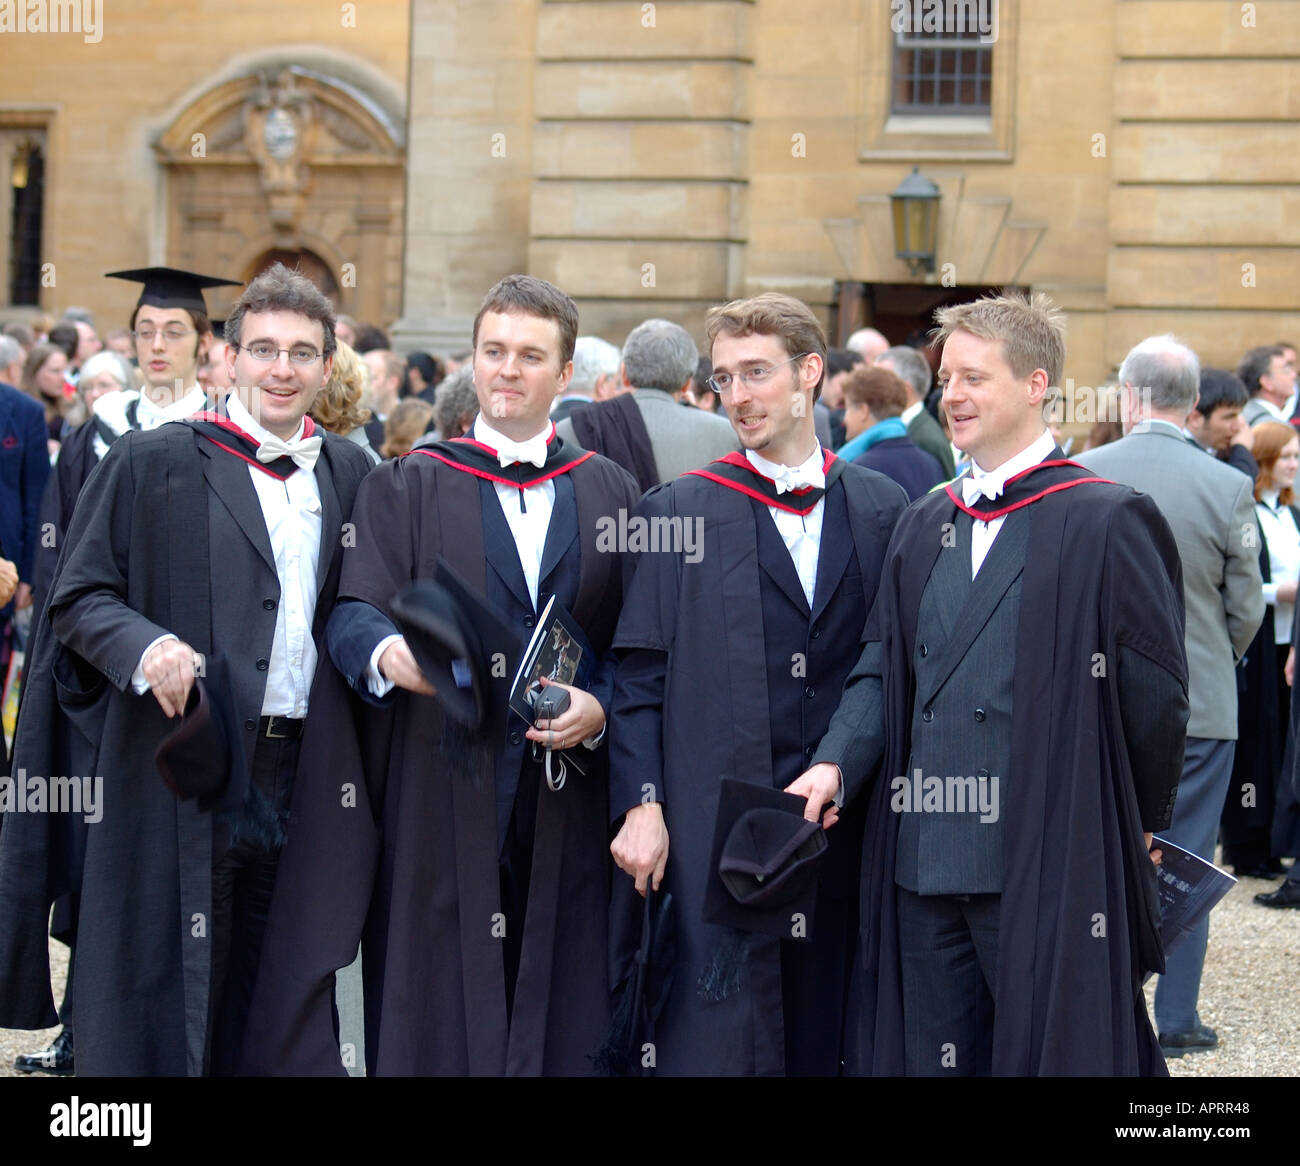 University graduates graduation ceremony oxford hires stock